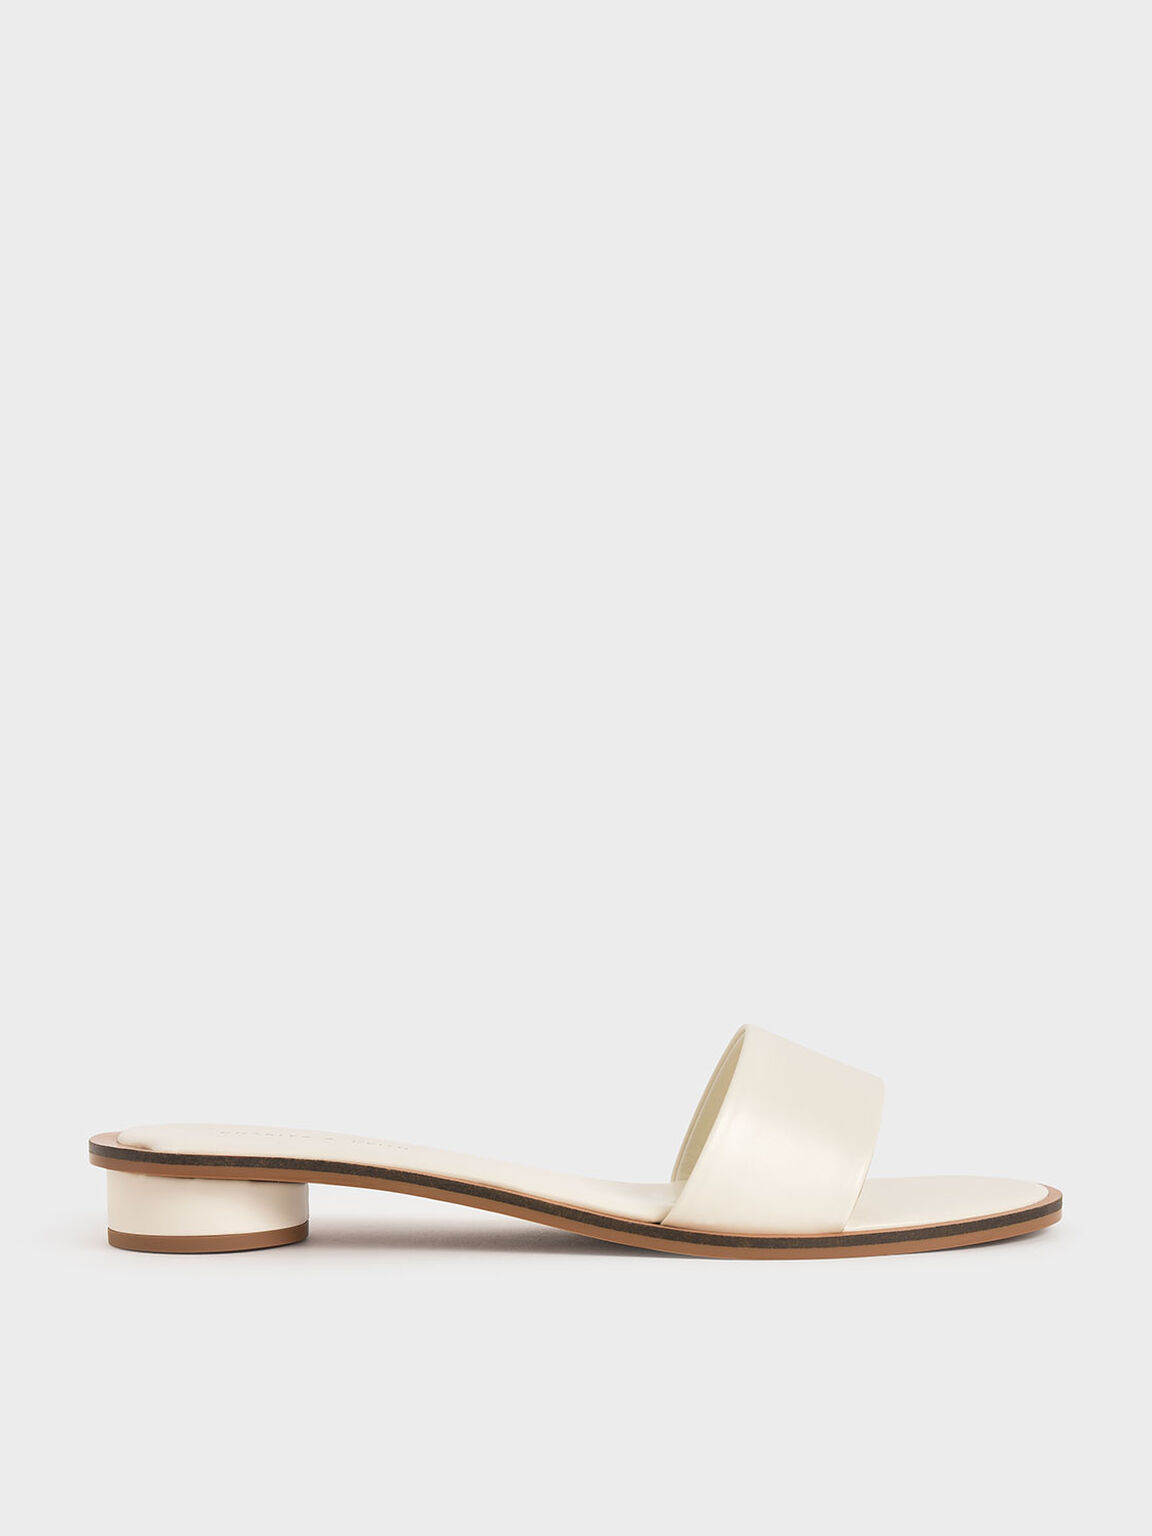 Two-Tone Slide Sandals, Cream, hi-res